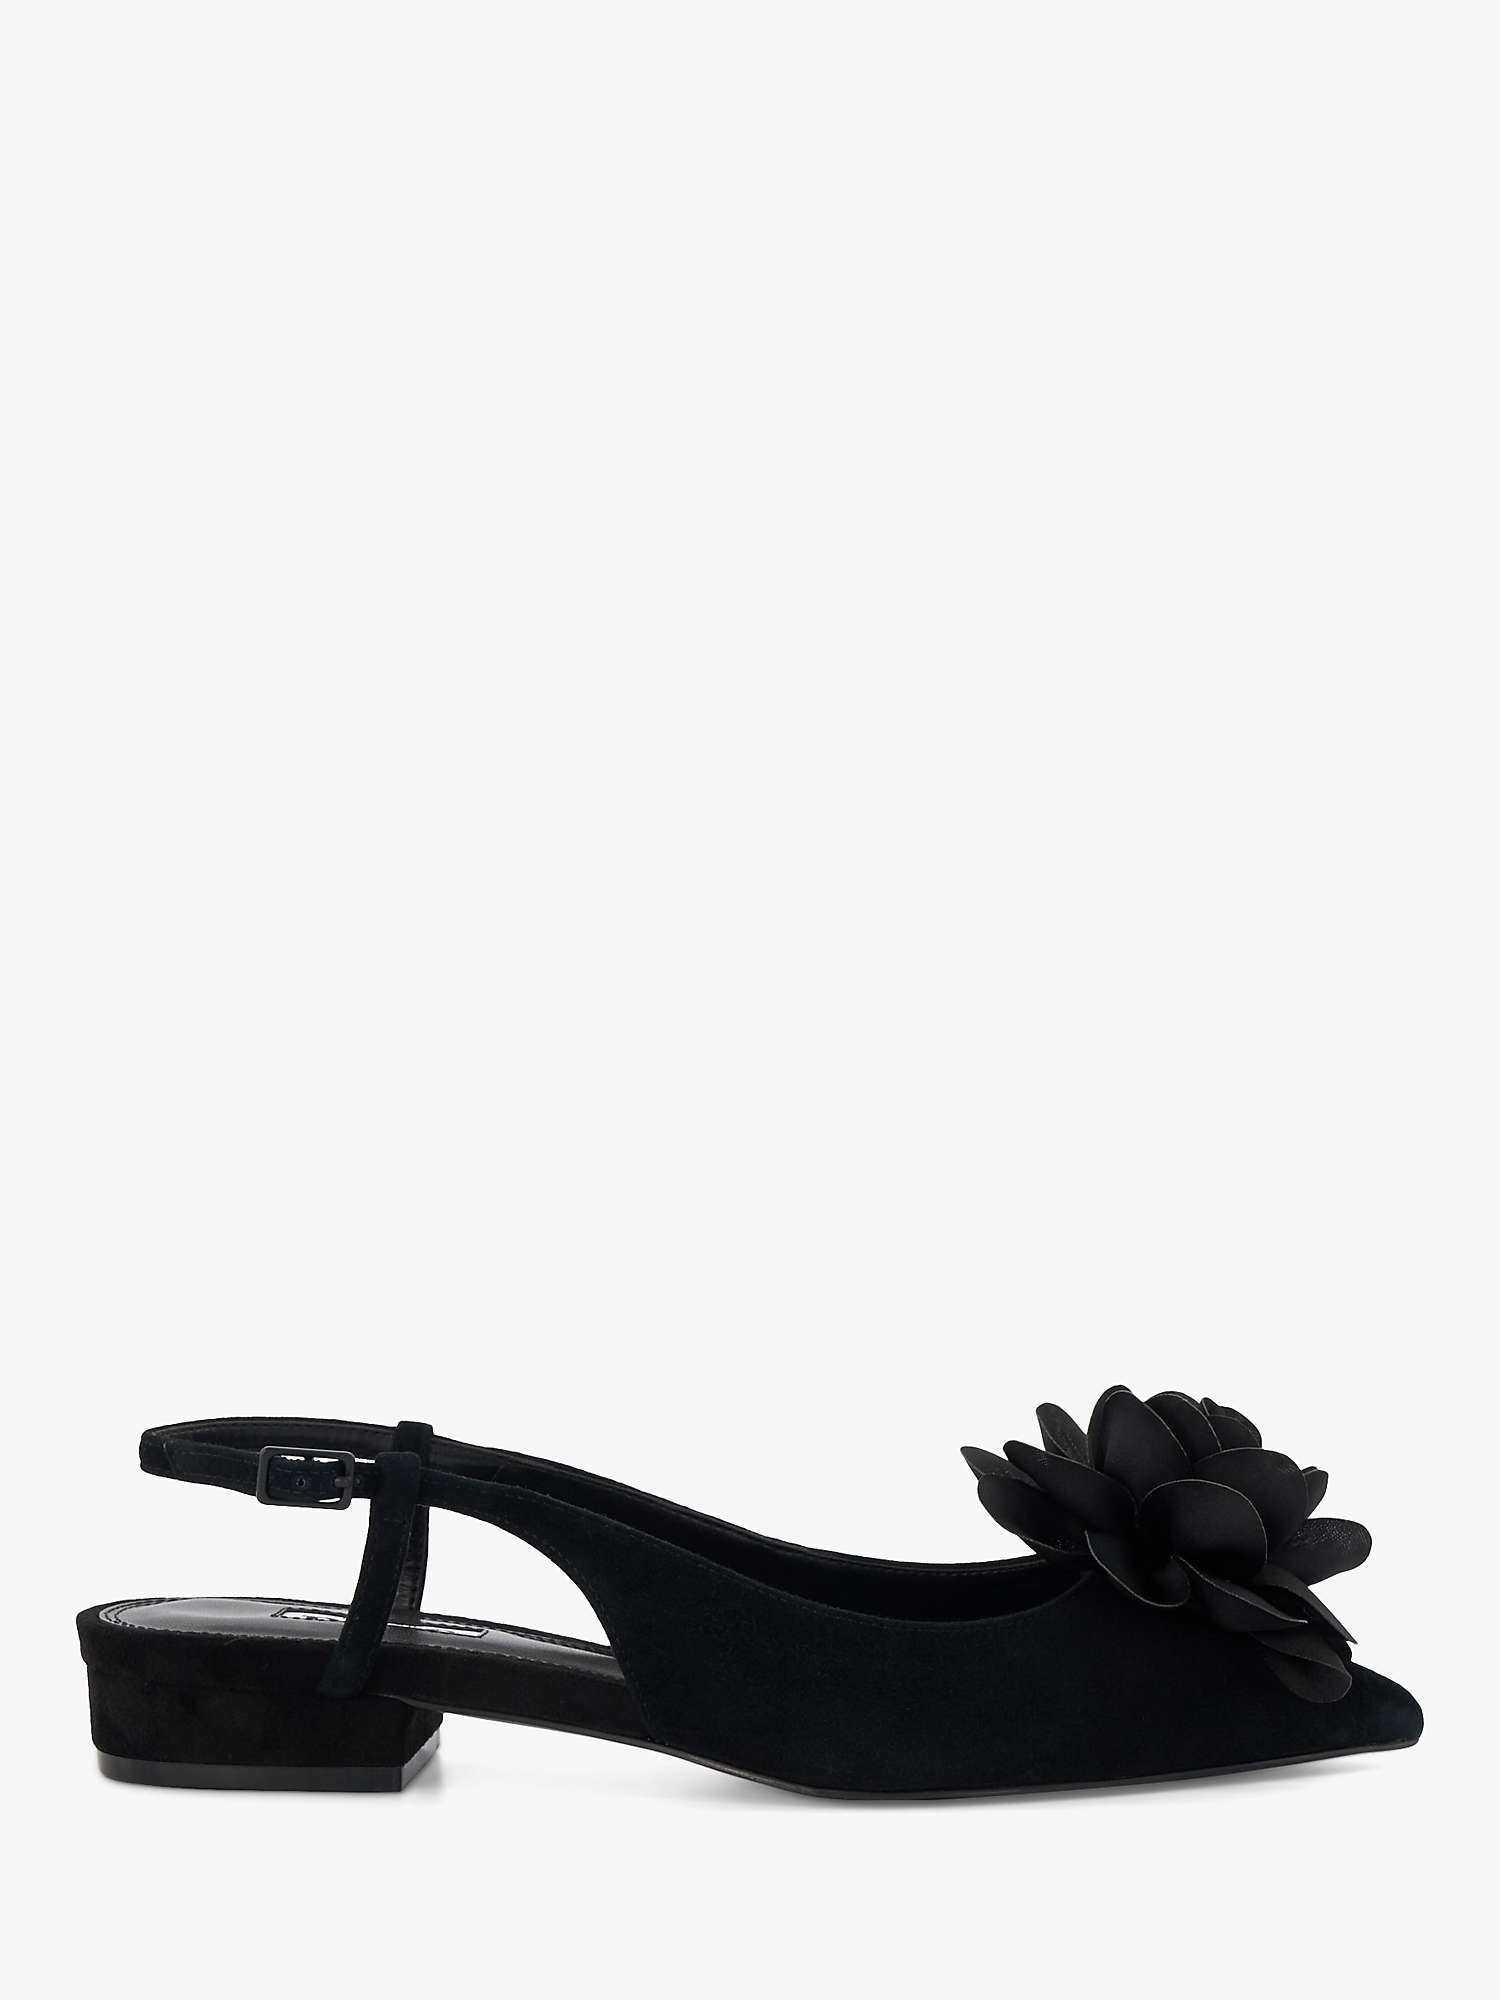 Dune Harperr Suede Ballerina Shoes, Black at John Lewis & Partners